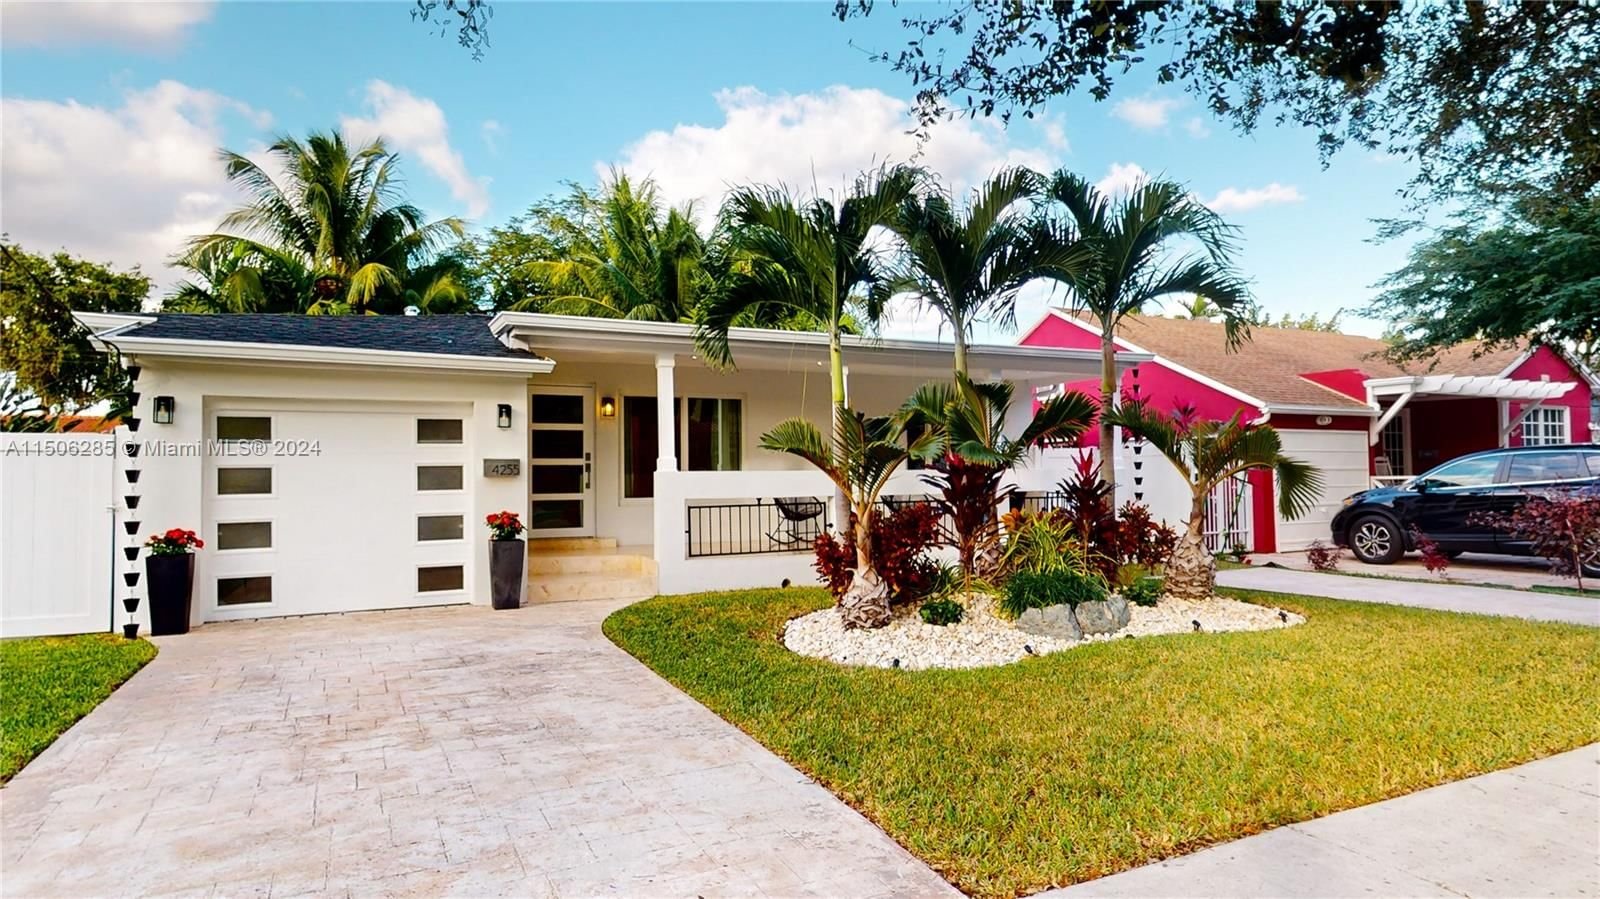 Real estate property located at 4255 15th St, Miami-Dade County, SUNNY GROVE, Miami, FL